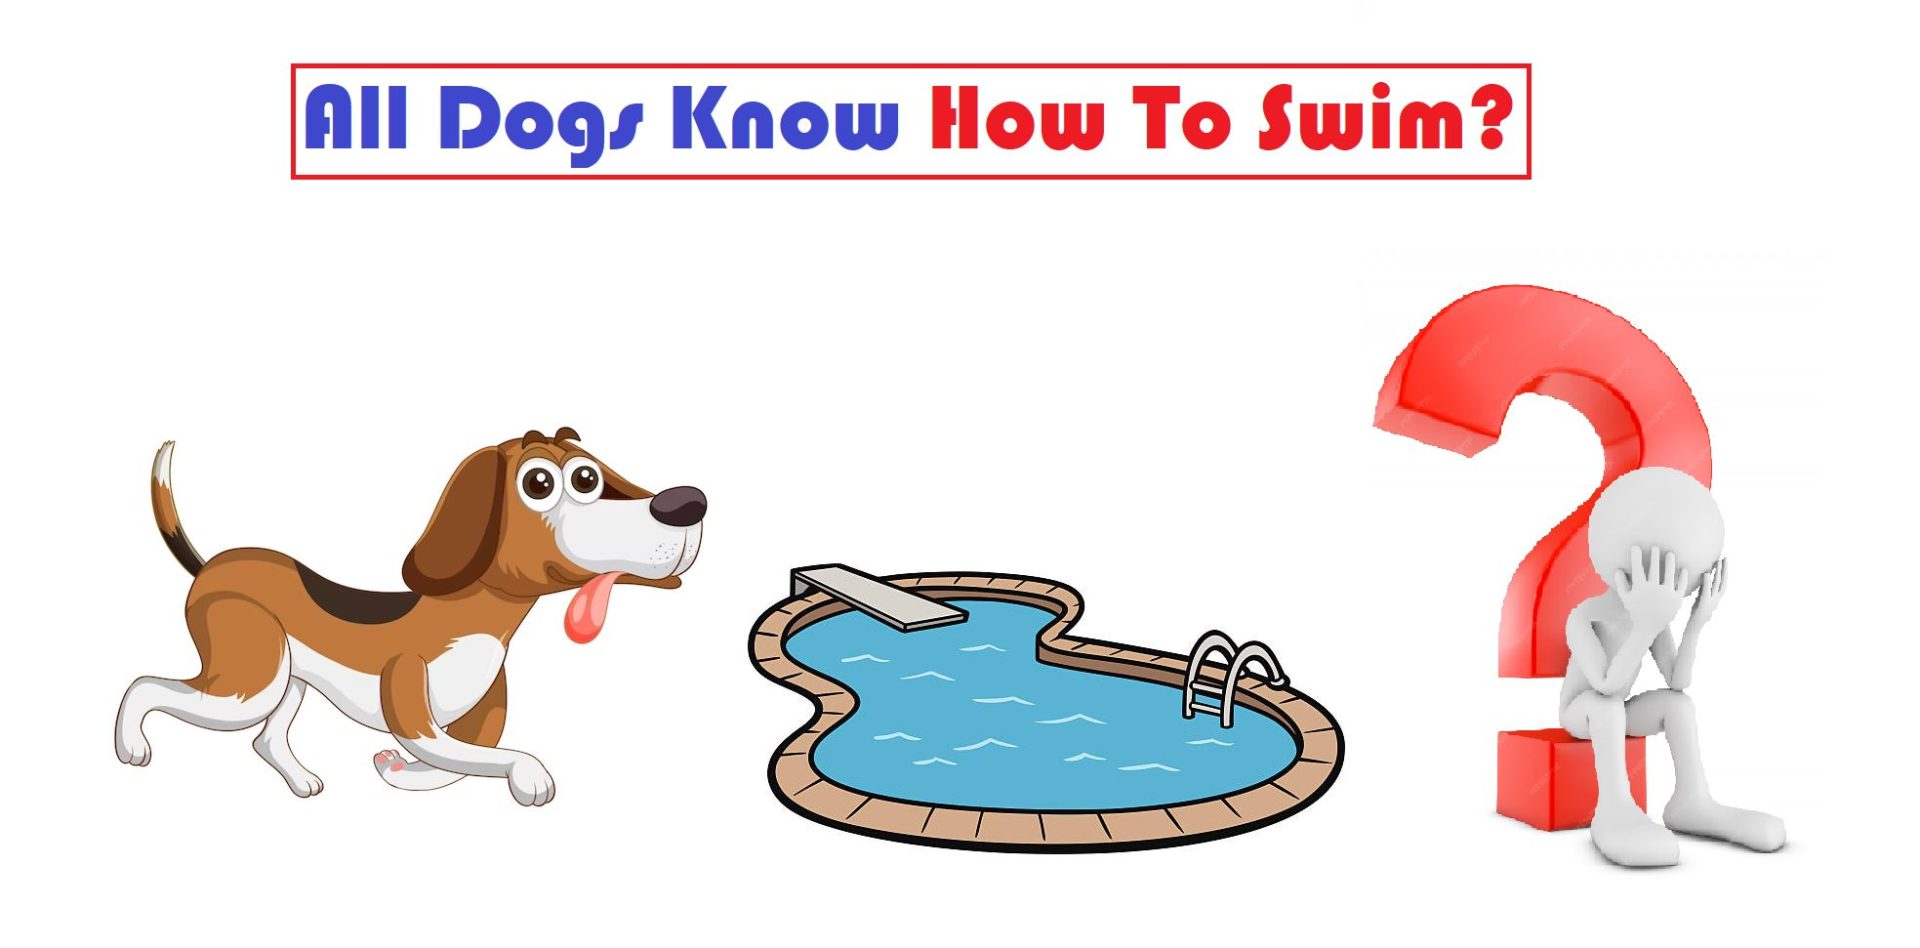 Do All Dogs Know How To Swim?